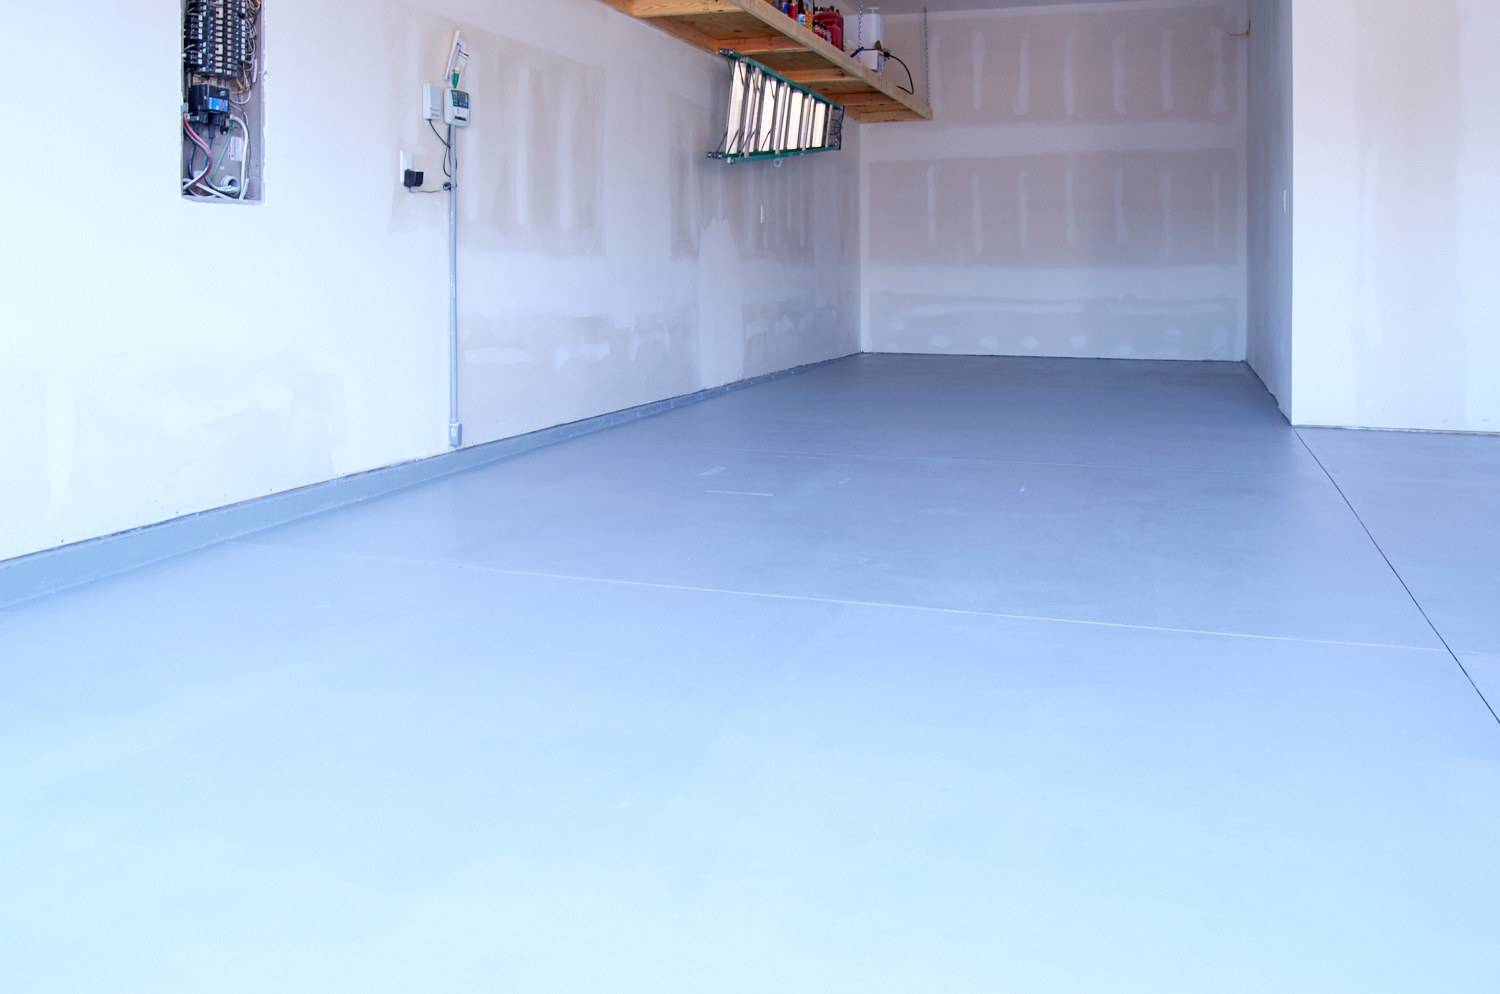 completed epoxy coating on a garage floor